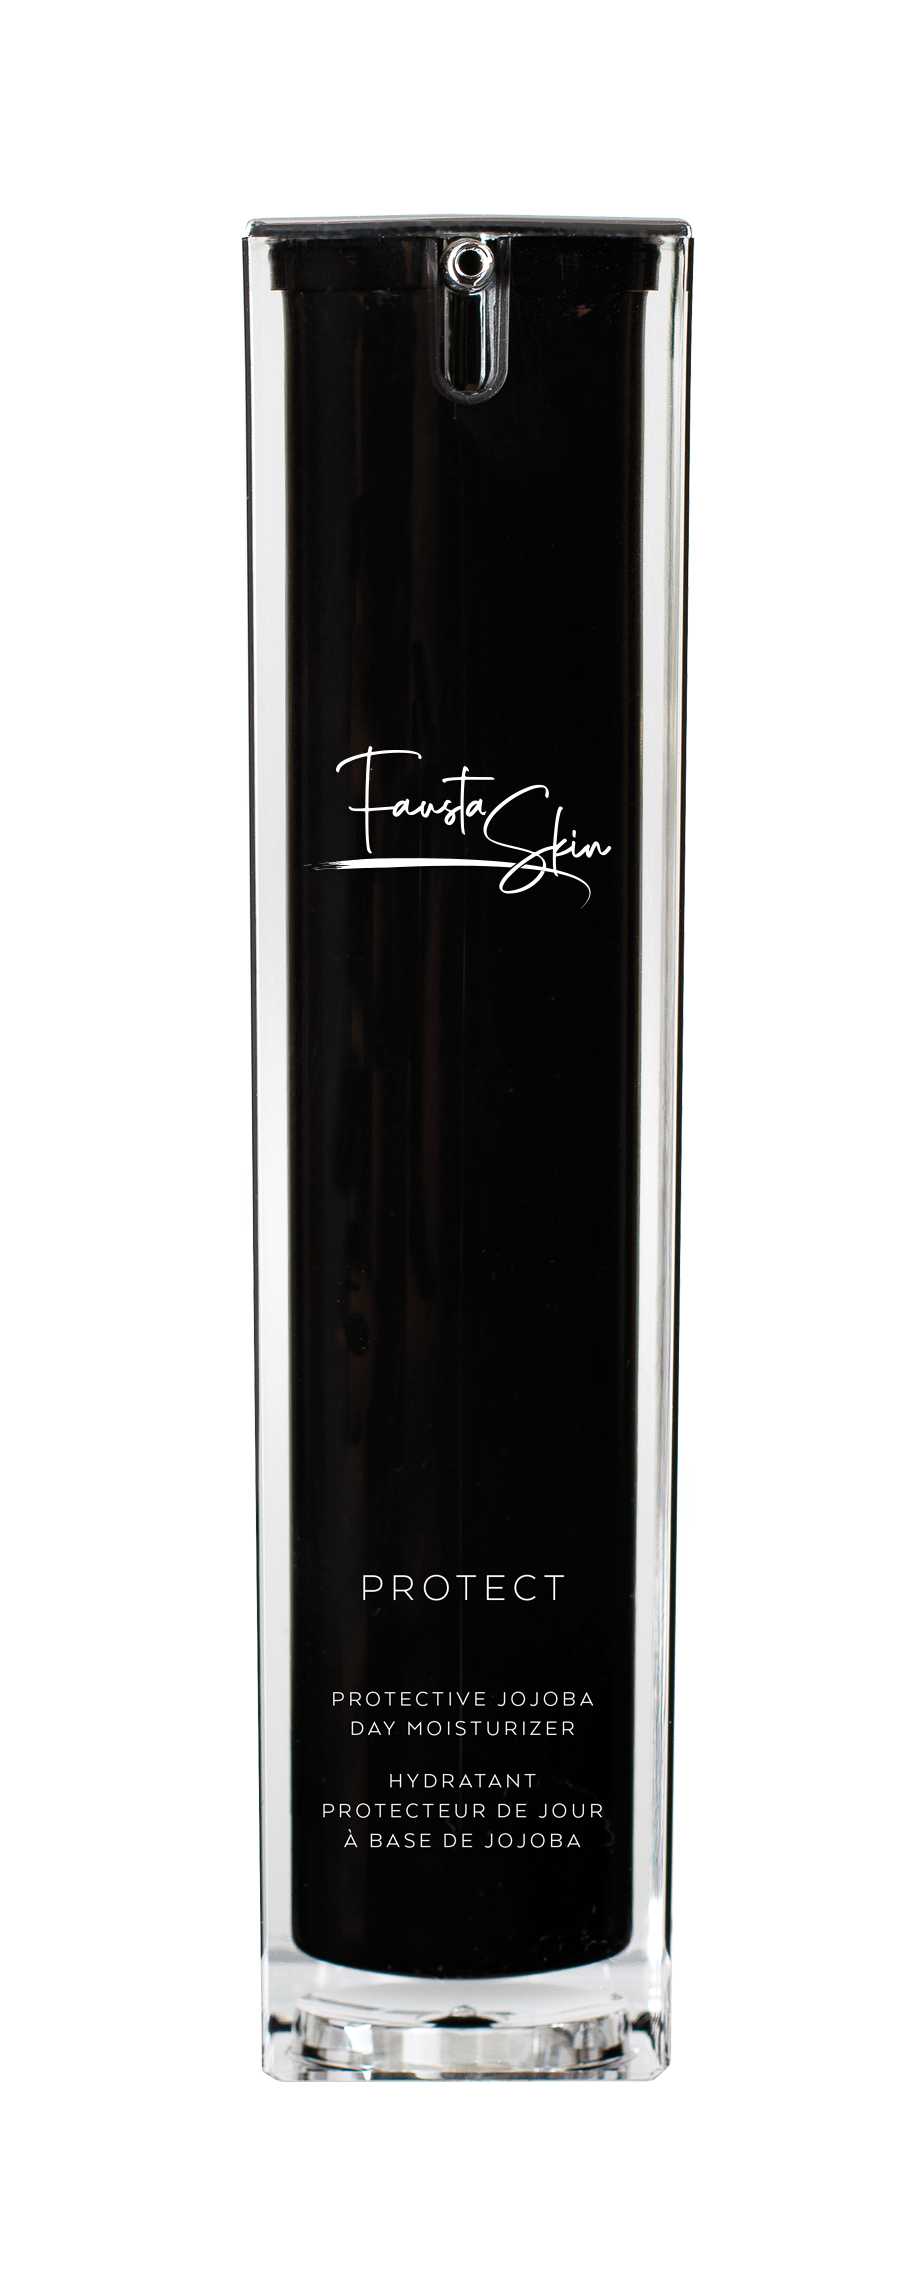 PROTECT 40ml: protective jojoba day moisturizer